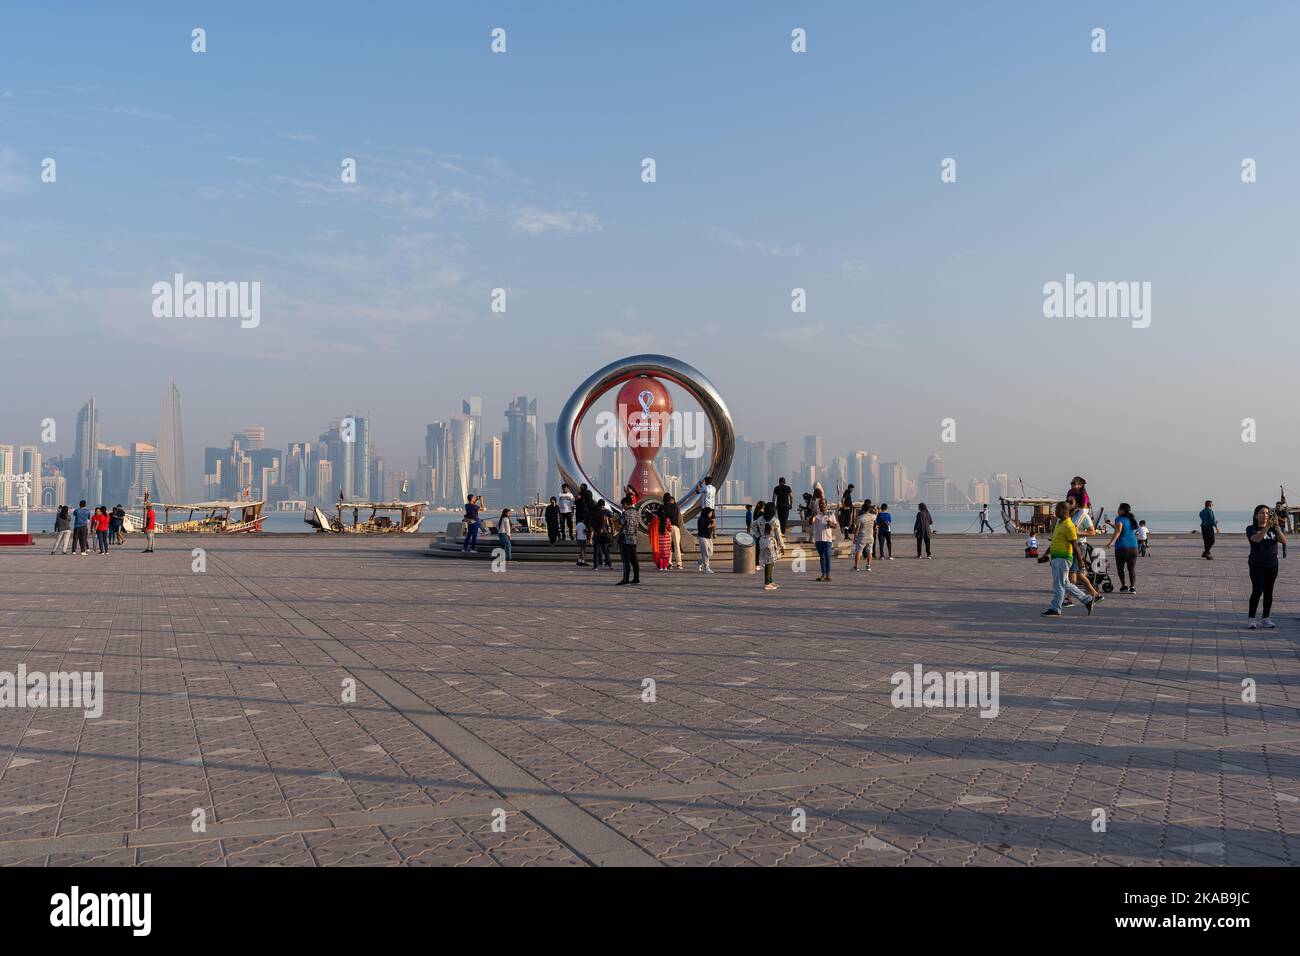 Doha, Qatar - October 28, 2022: The FIFA World Cup Qatar 2022 Official Countdown Clock, located at Doha’s Corniche Fishing Spot. Stock Photo